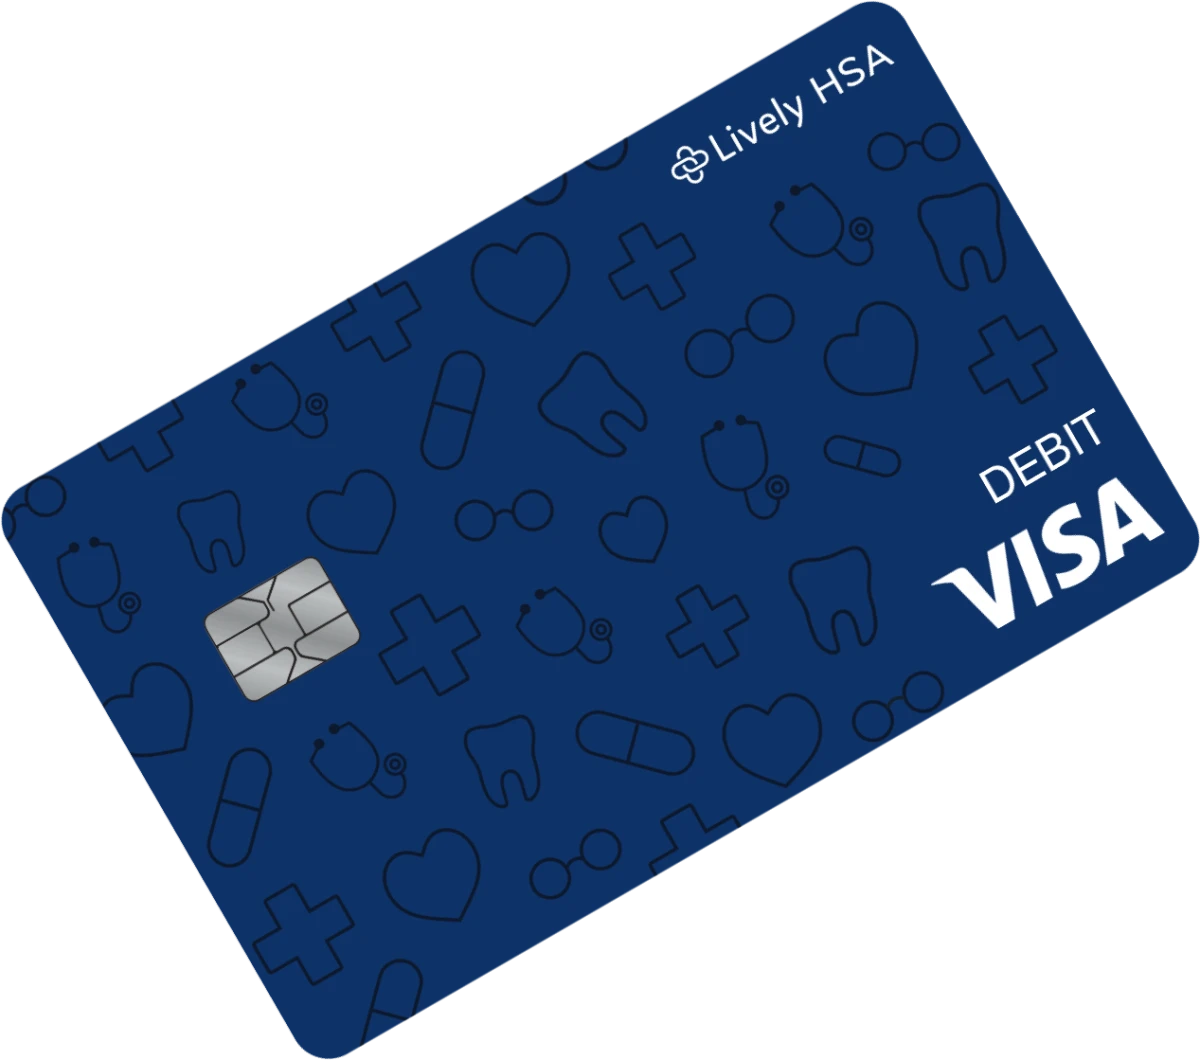 CAN I USE MY FSA OR HSA DEBIT CARD ON ?